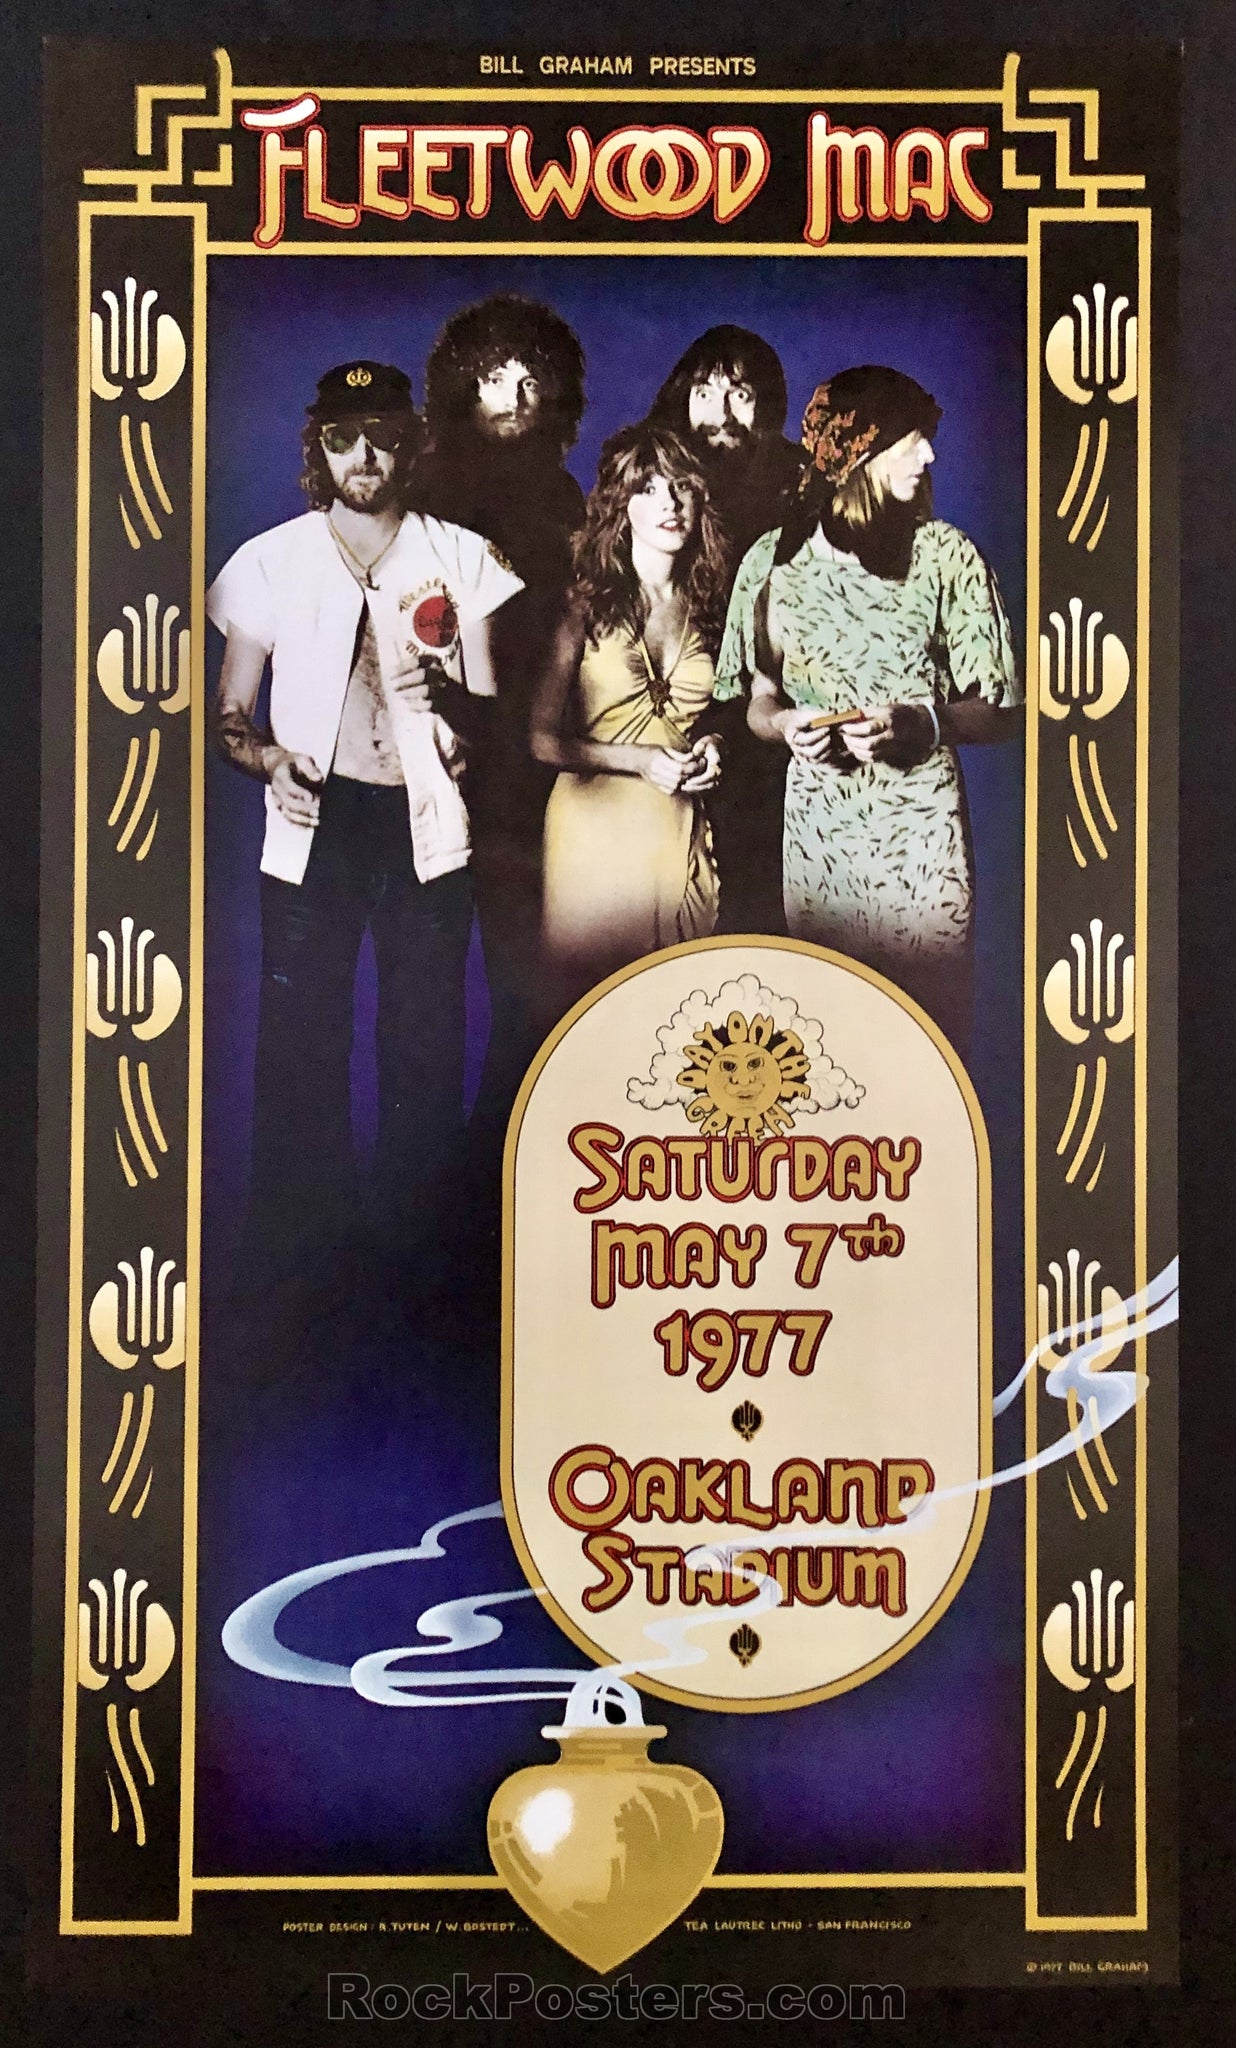 AUCTION - Fleetwood Mac Original Randy Tuten 1977 Poster - Oakland Stadium - Condition - Mint